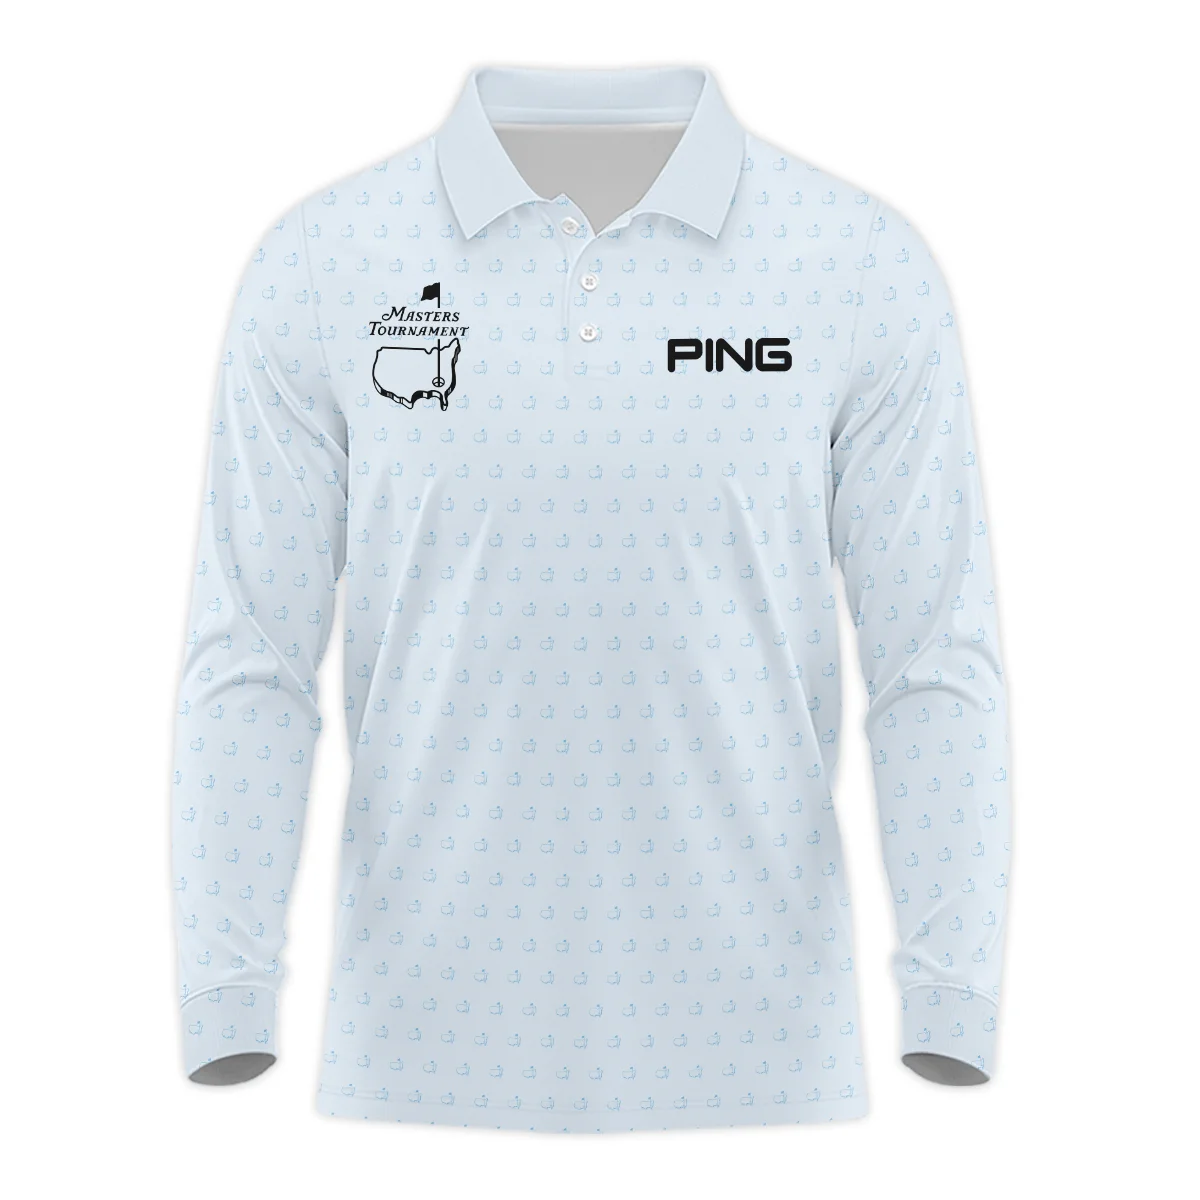 Pattern Masters Tournament Ping Hawaiian Shirt White Light Blue Color Pattern Logo  Oversized Hawaiian Shirt